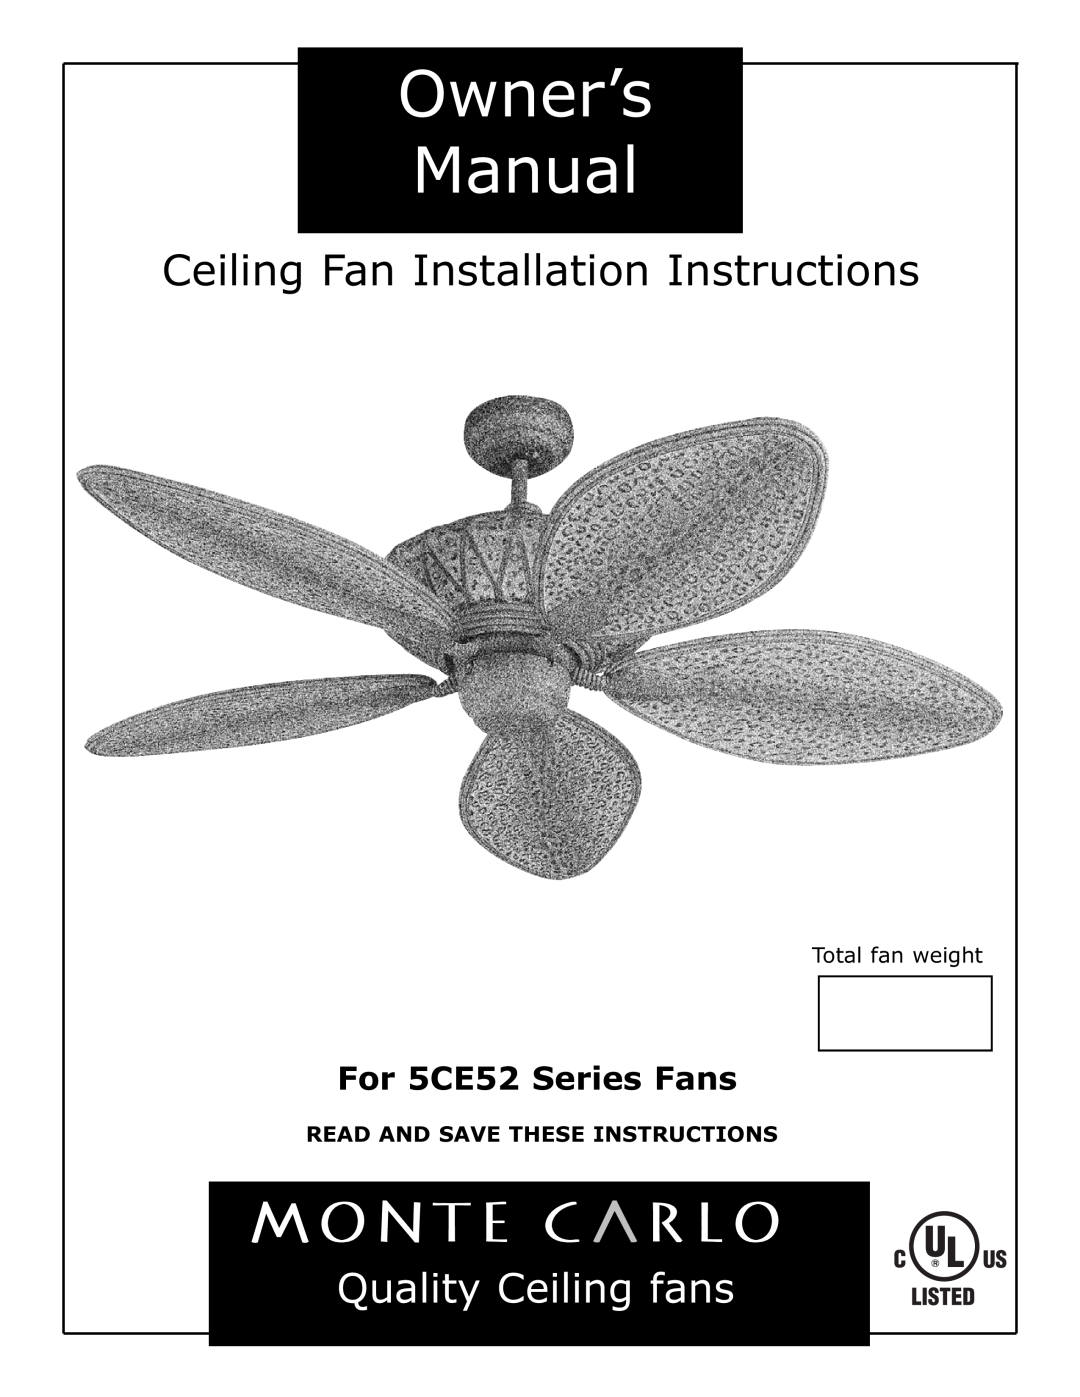 Monte Carlo Fan Company 5CE52 owner manual Ceiling Fan Installation Instructions, Quality Ceiling fans, Total fan weight 